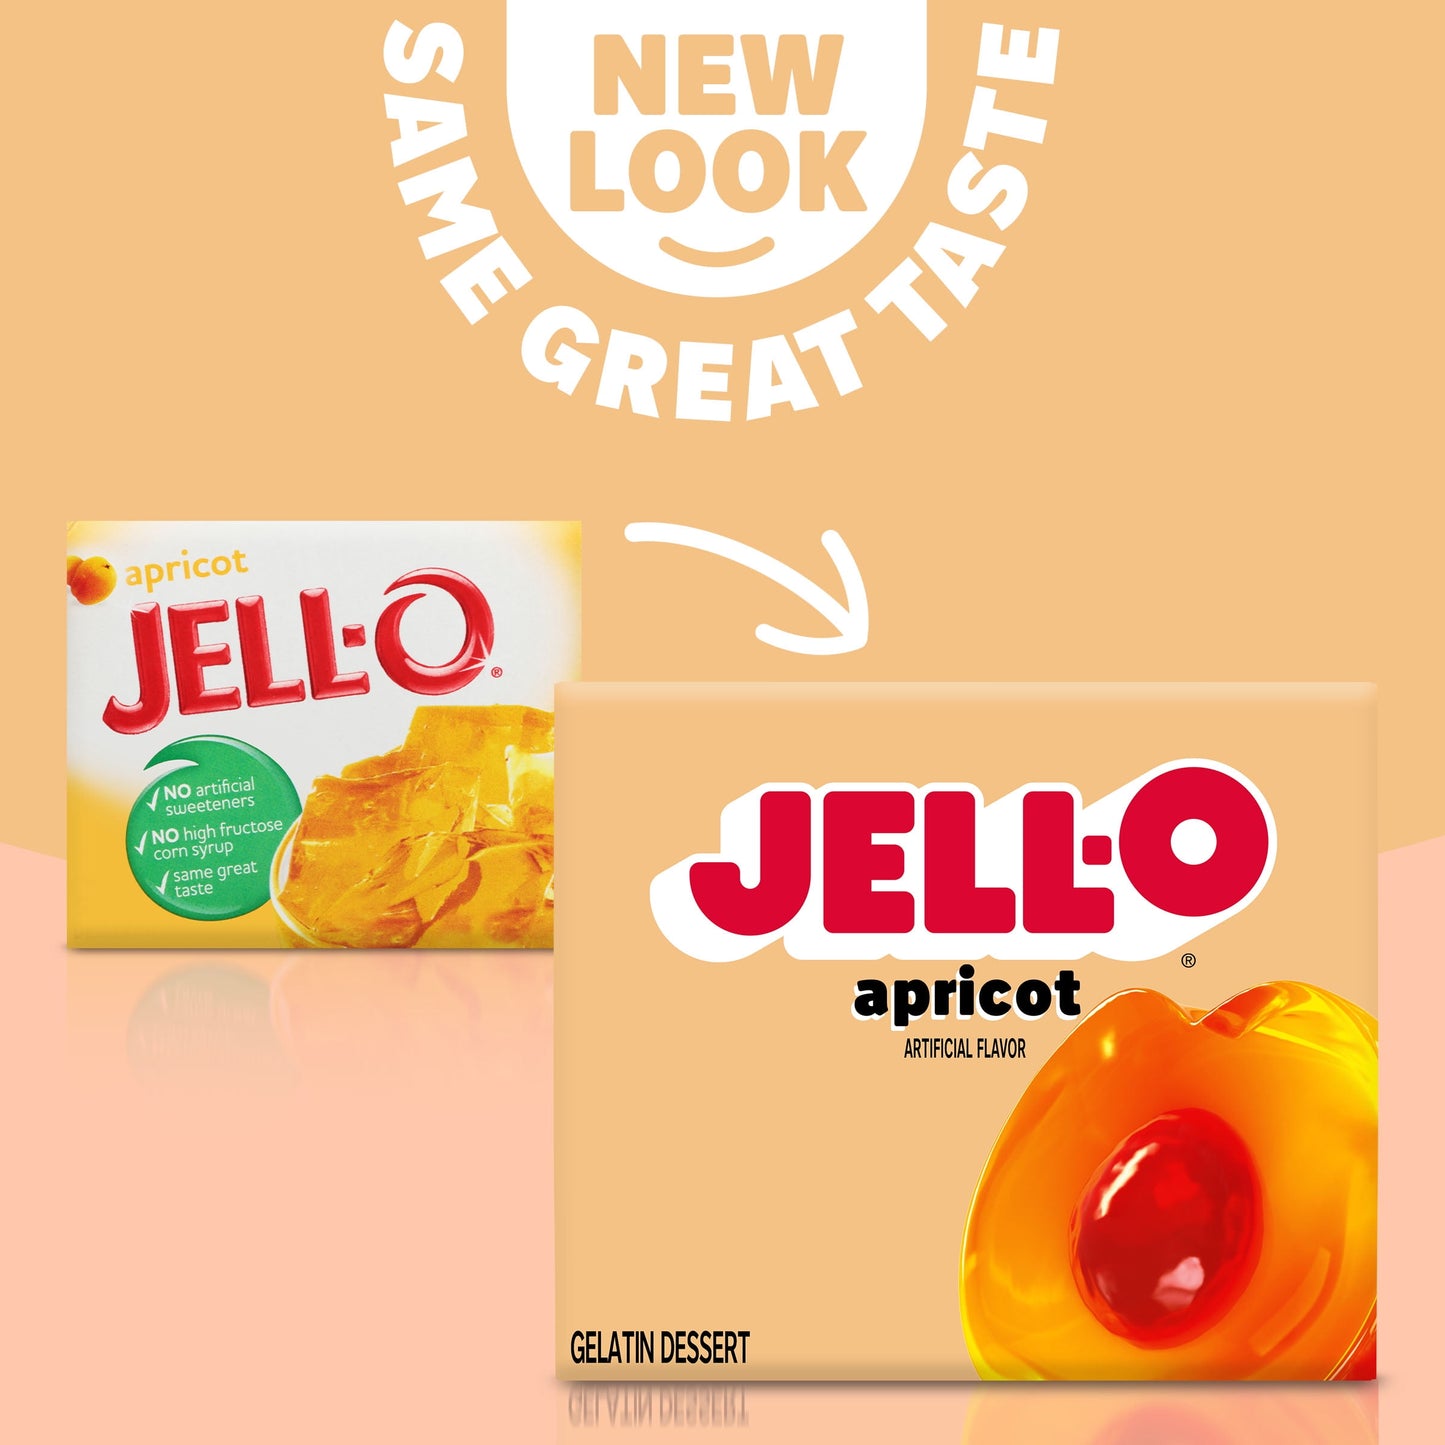 Jell-O Apricot Artificially Flavored Gelatin Dessert Mix, 3 oz Box